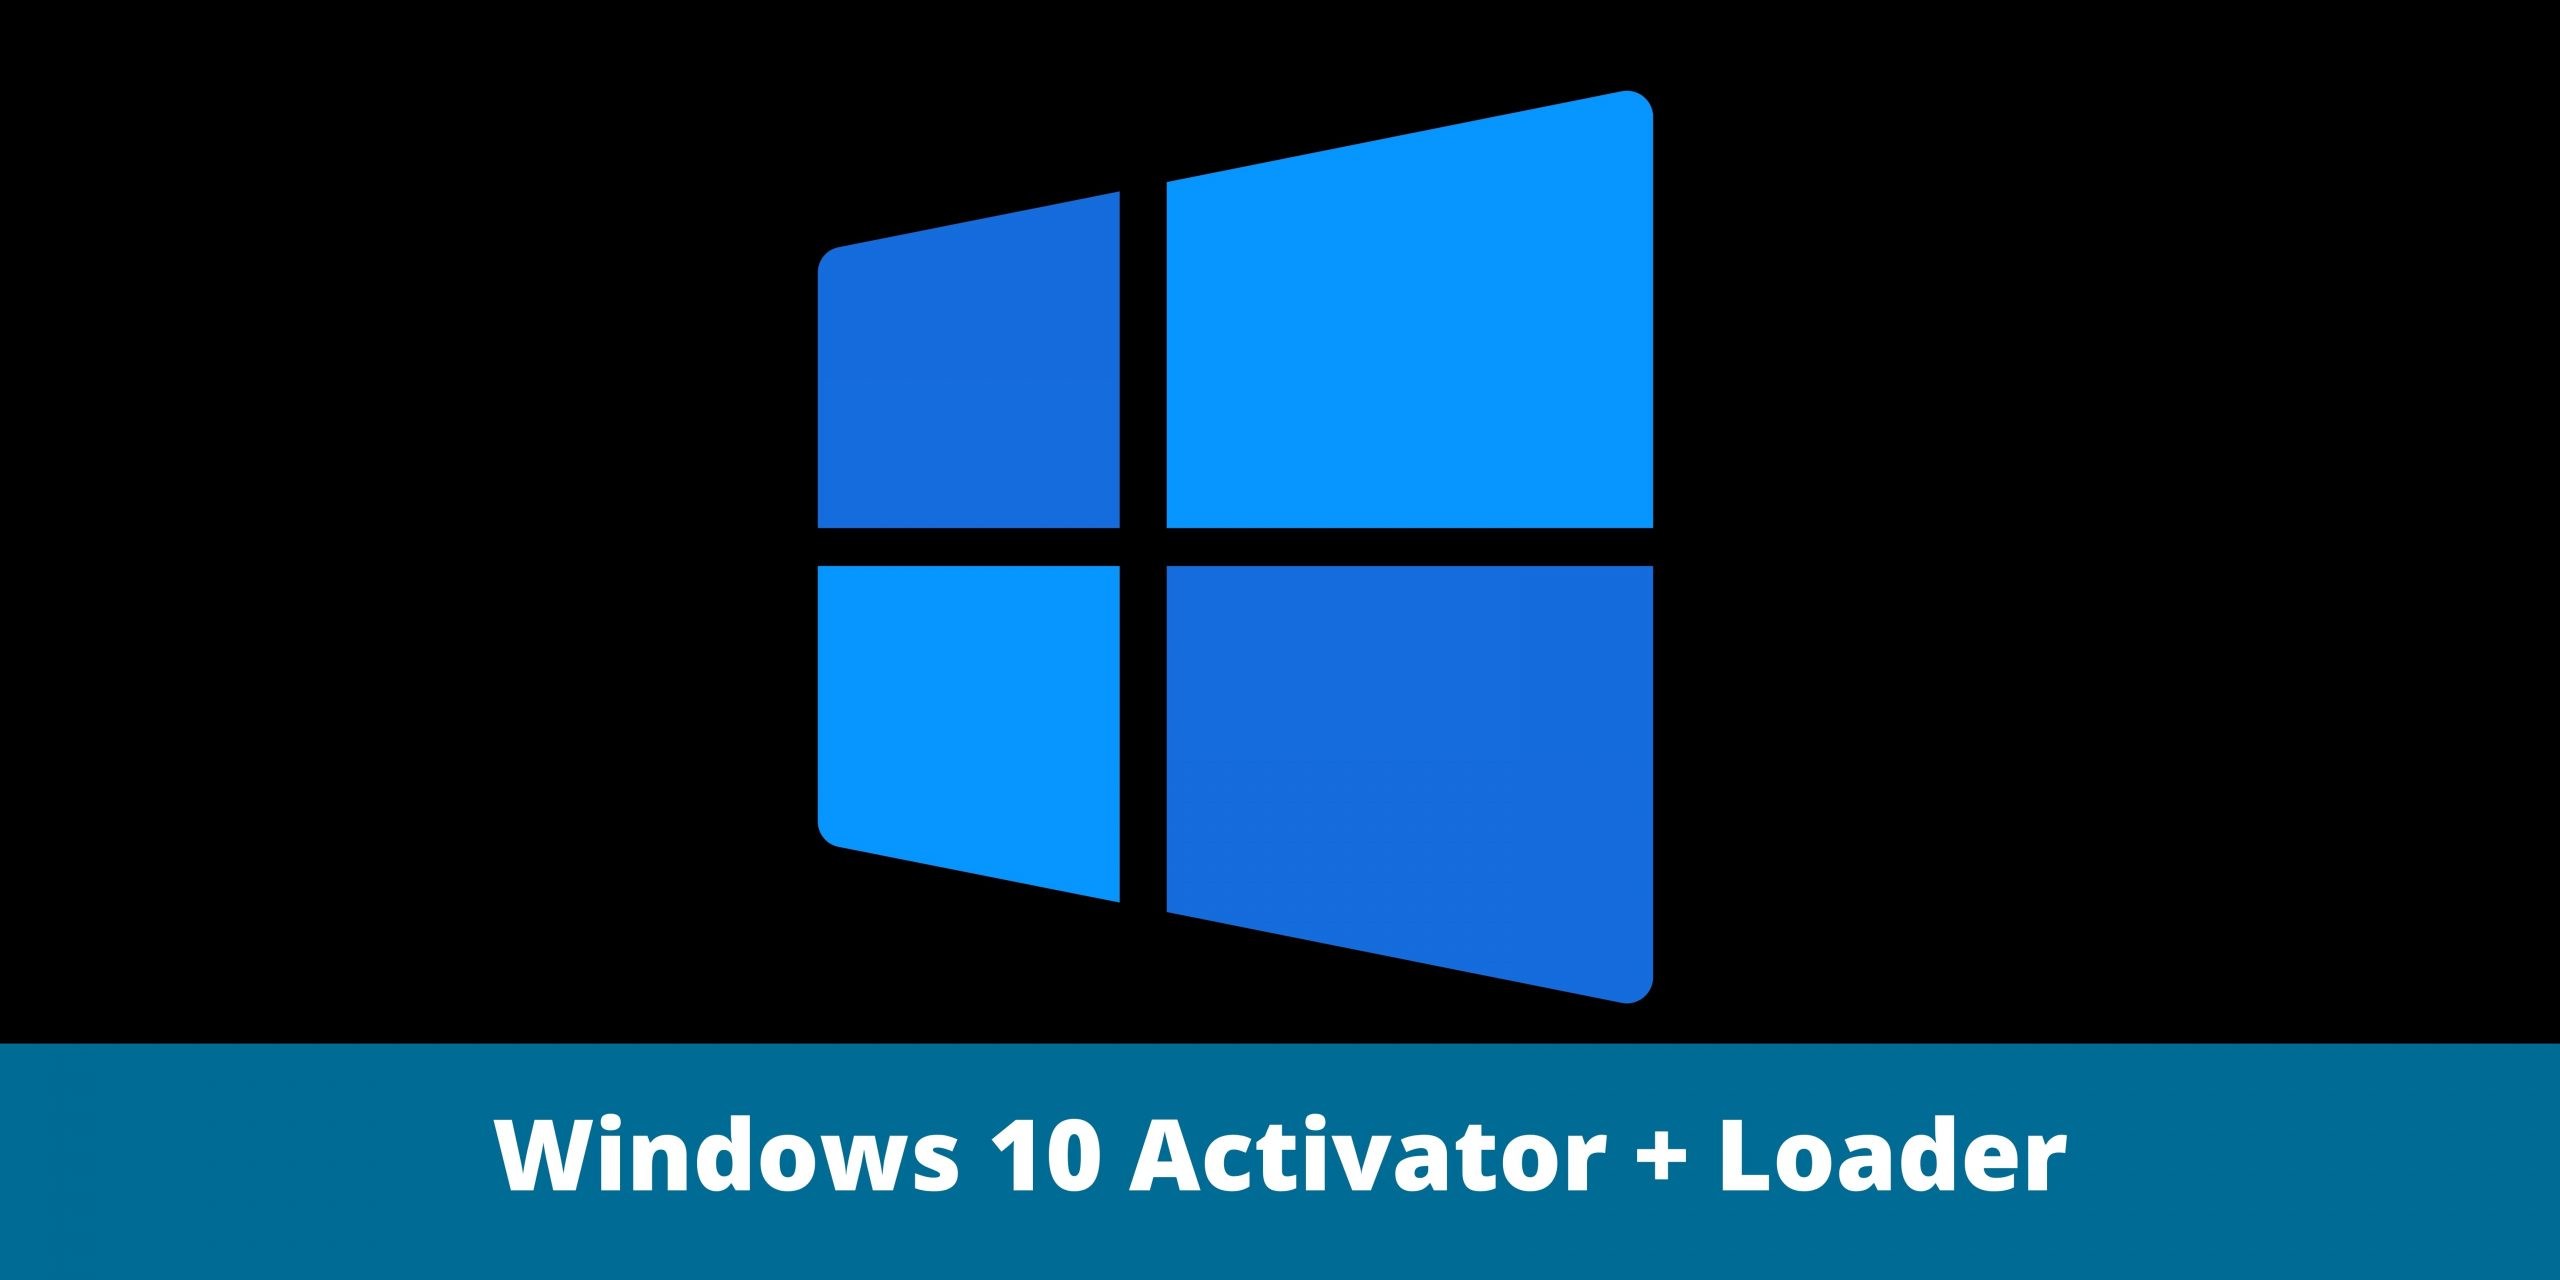 Windows 10 Activator + Loader